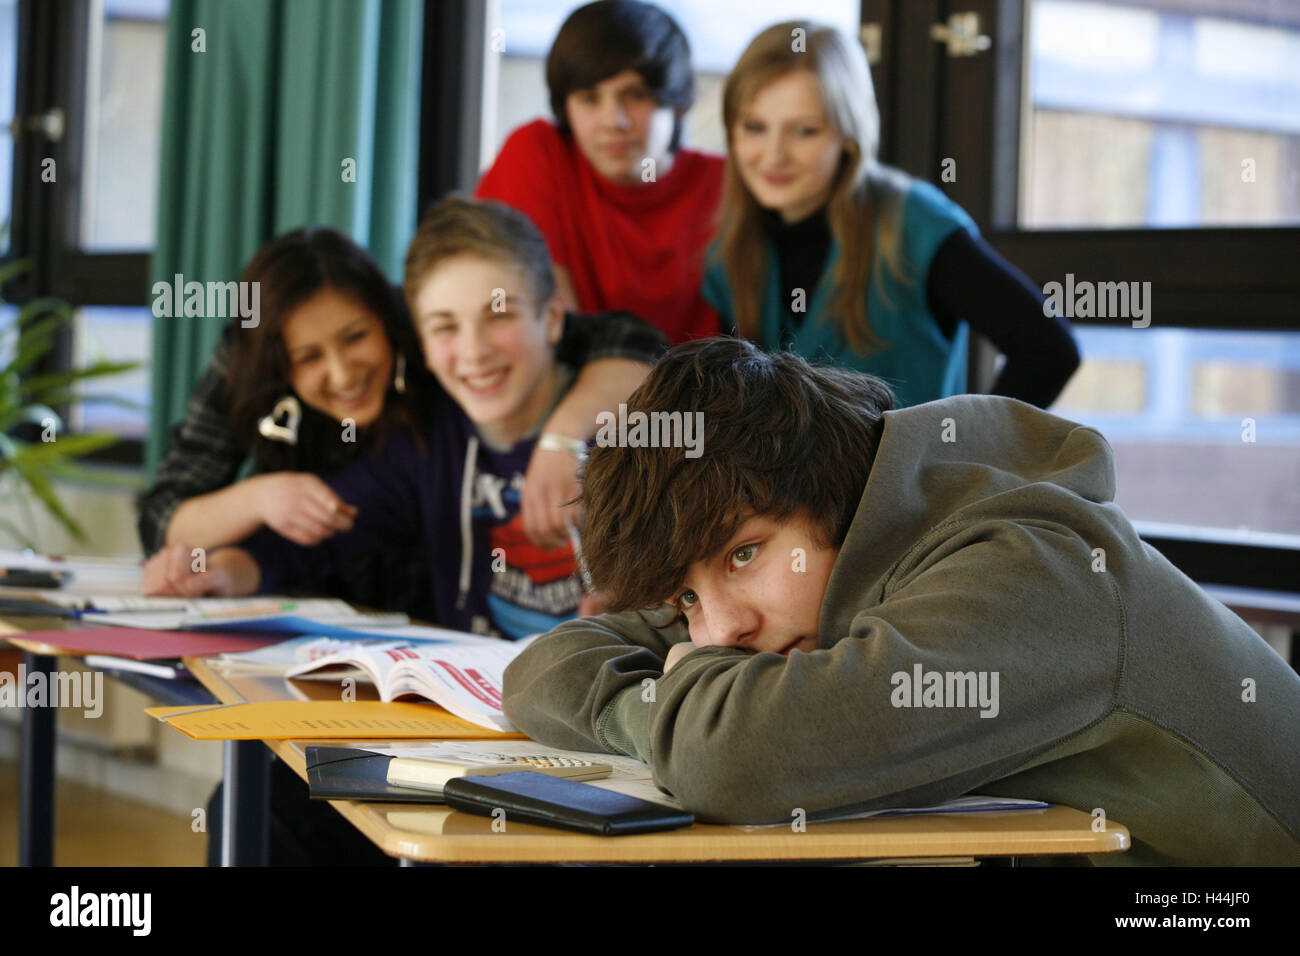 School, classroom, schoolboy, harassment, Stock Photo